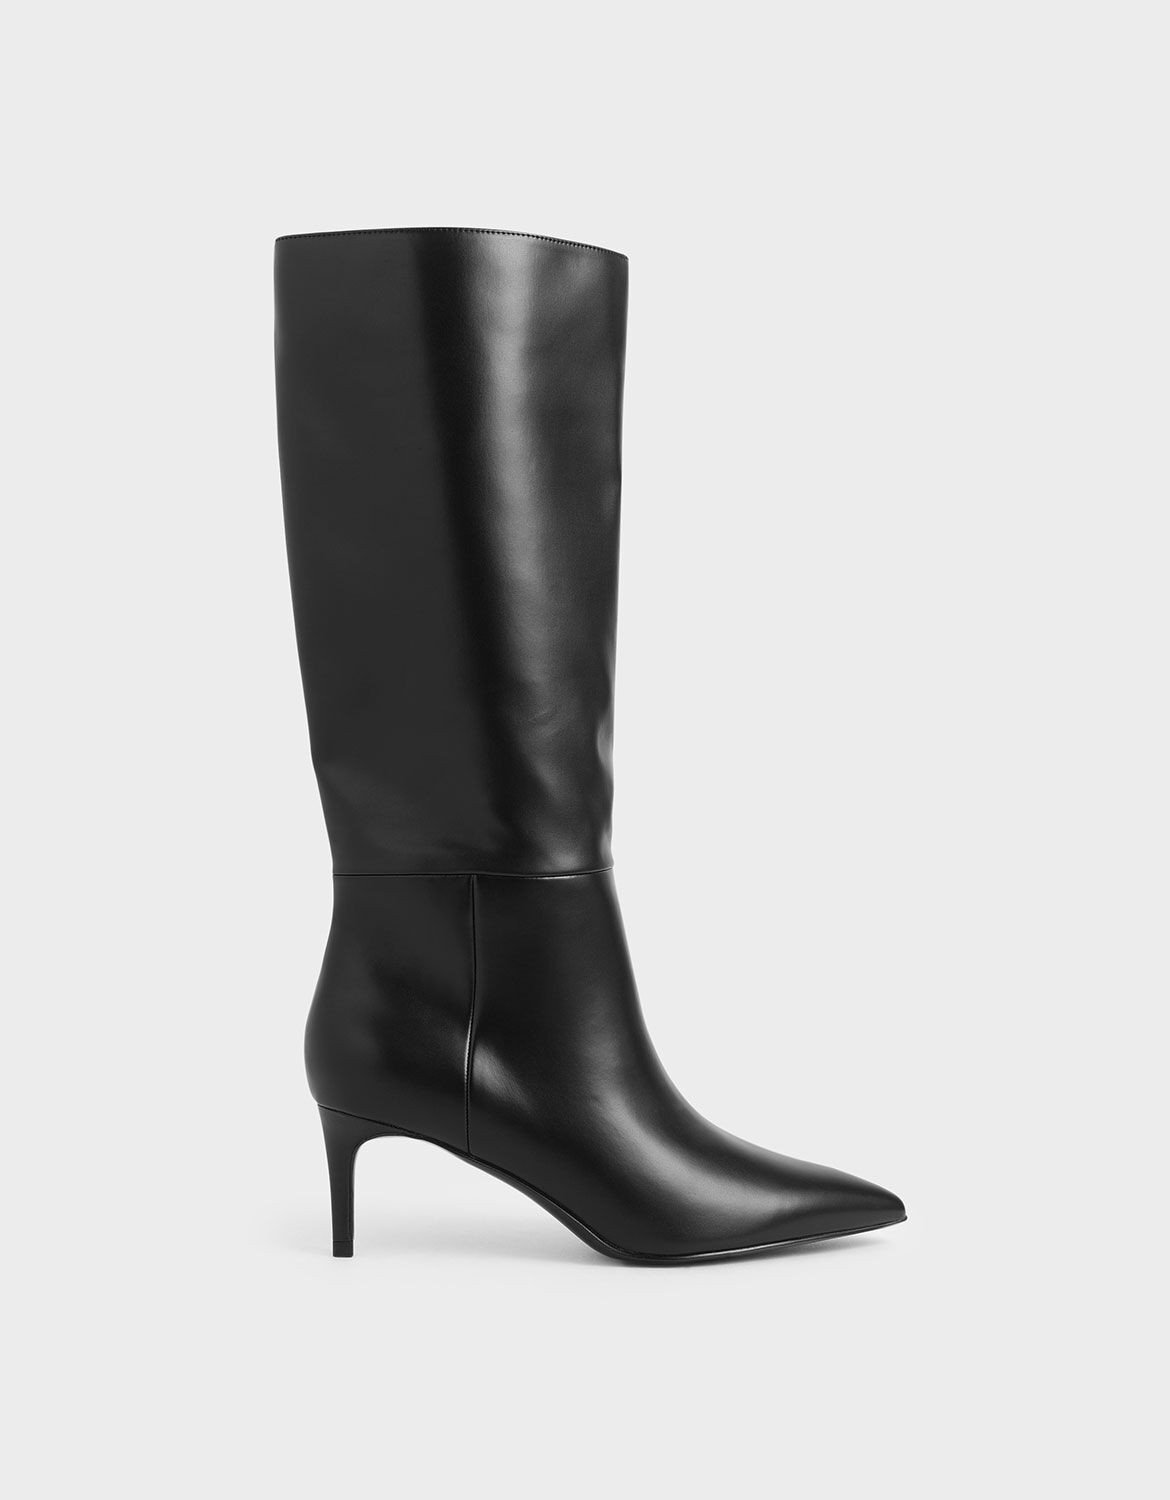 black knee high boots australia